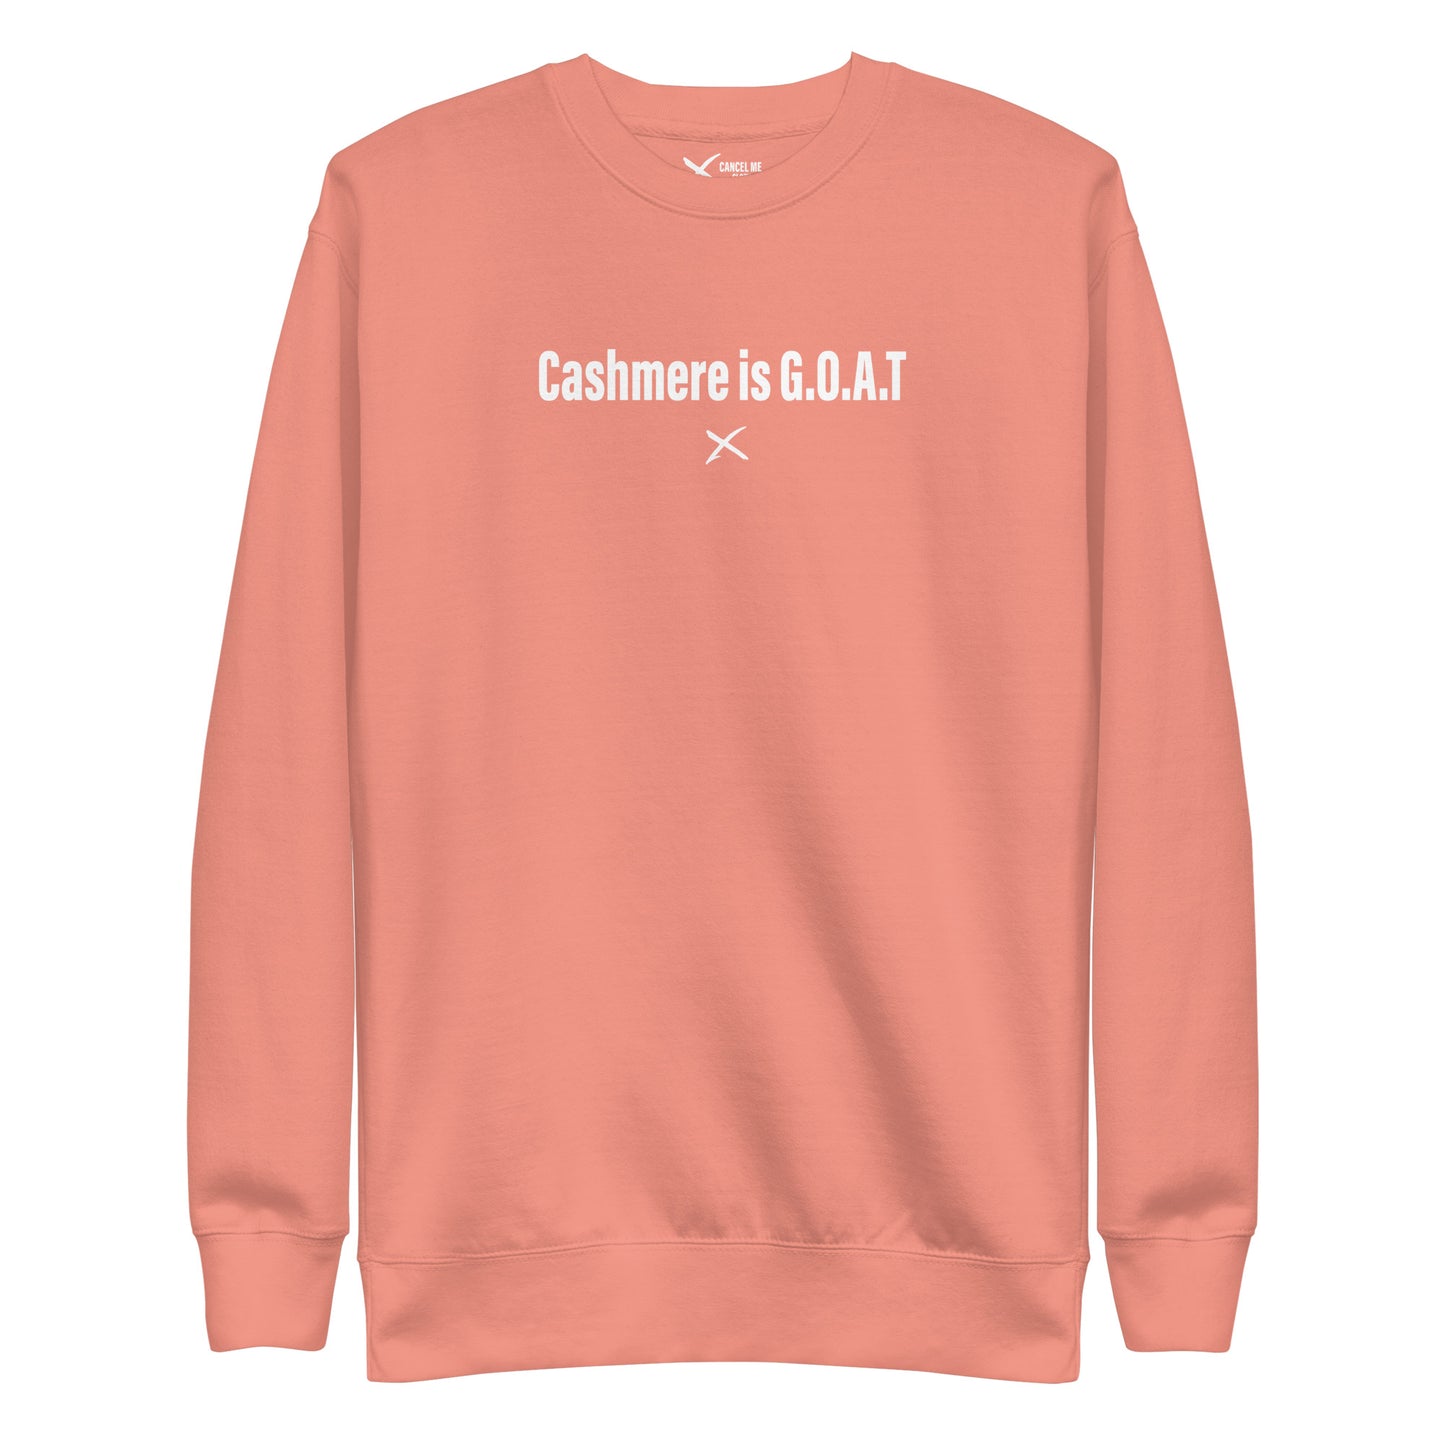 Cashmere is G.O.A.T - Sweatshirt